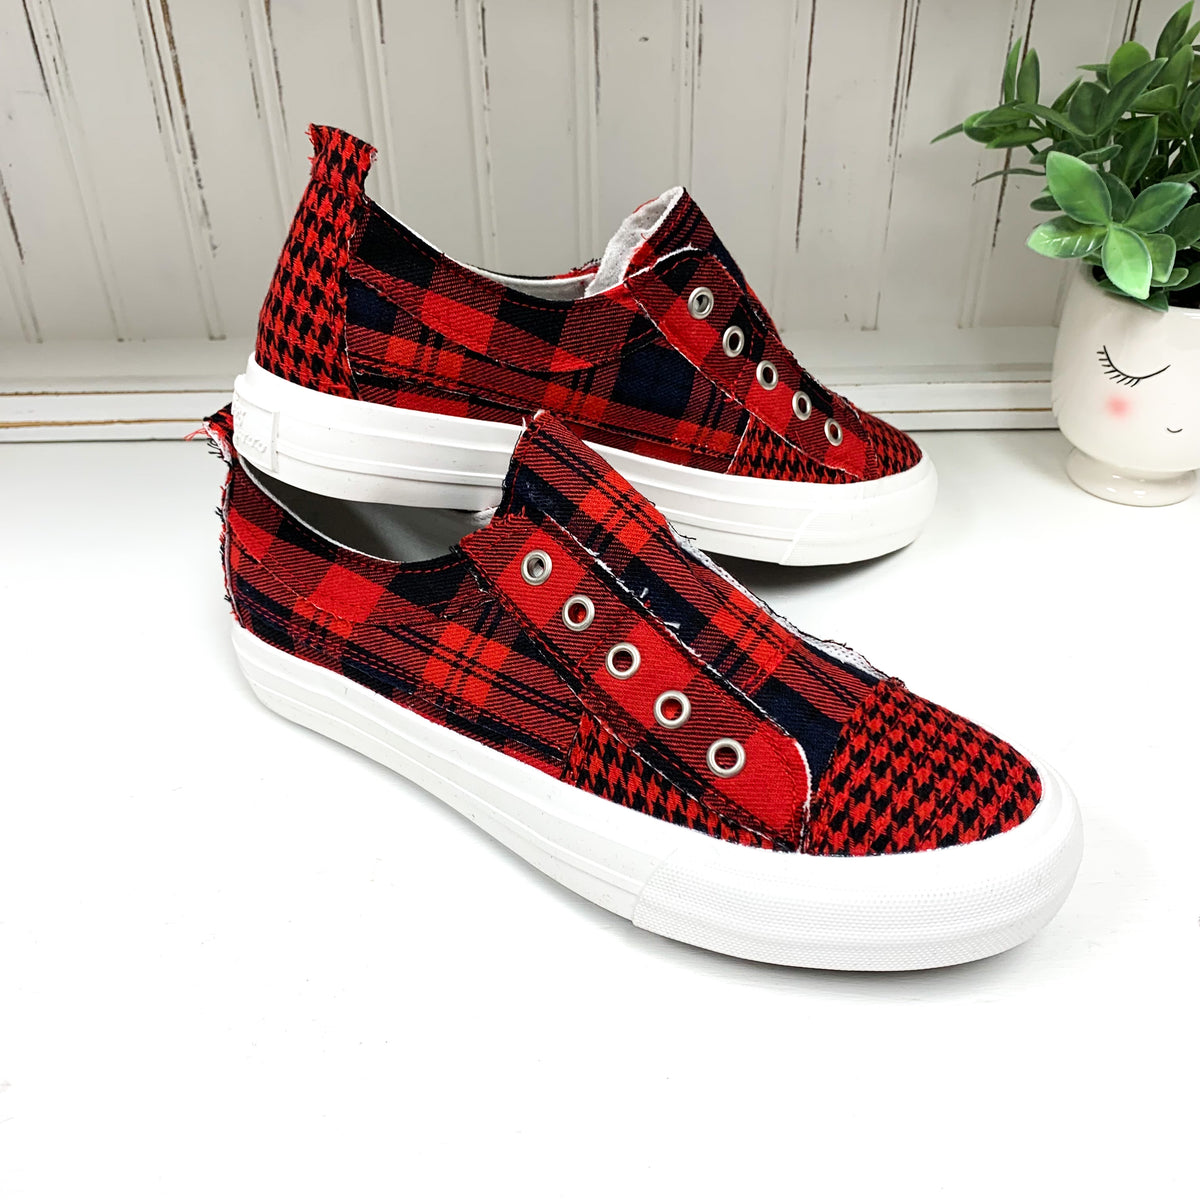 Mix - Red & Black Sneaker